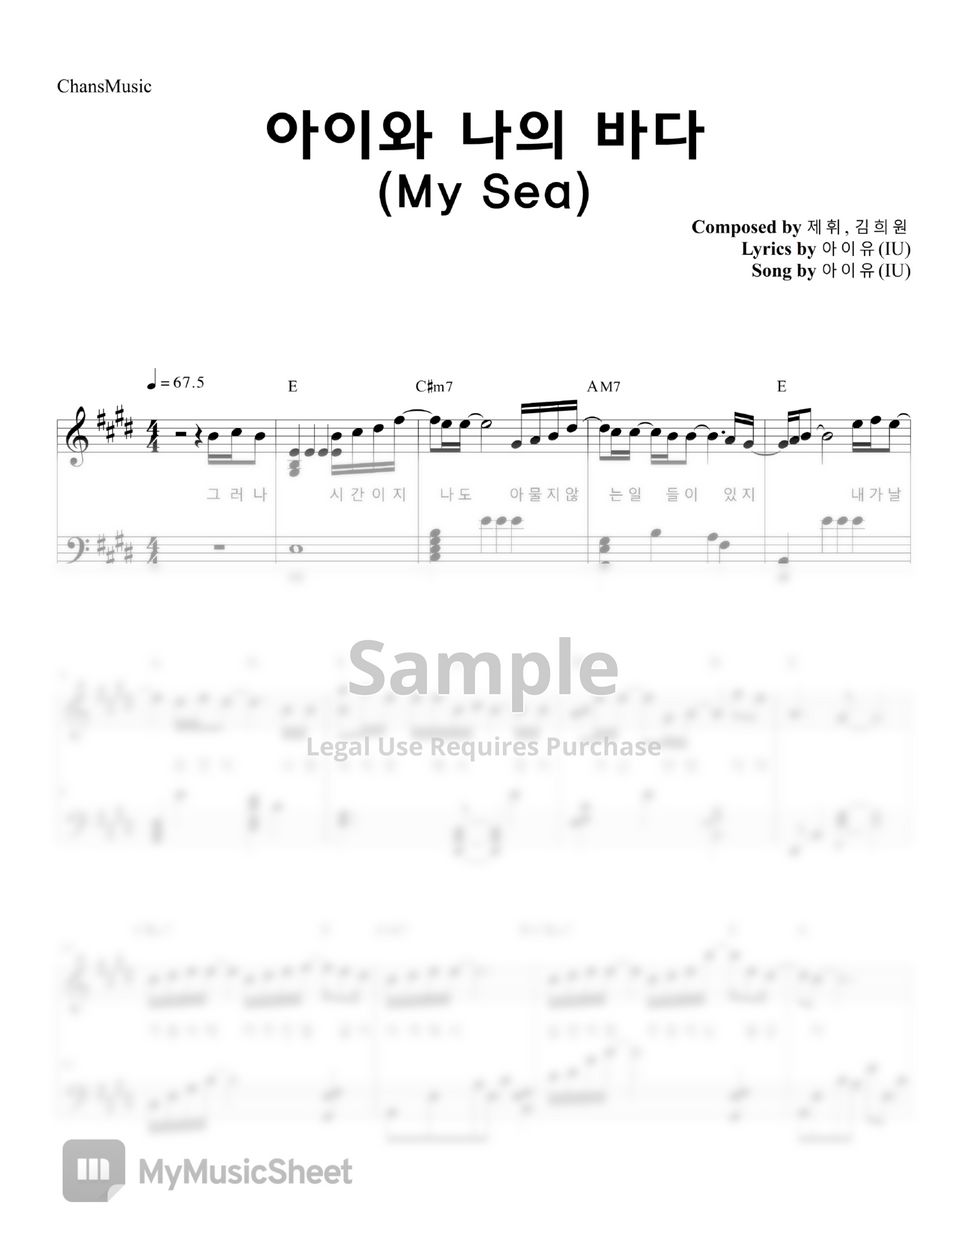 IU (아이유) - My Sea (아이와 나의 바다) (가사 포함) by ChansMusic